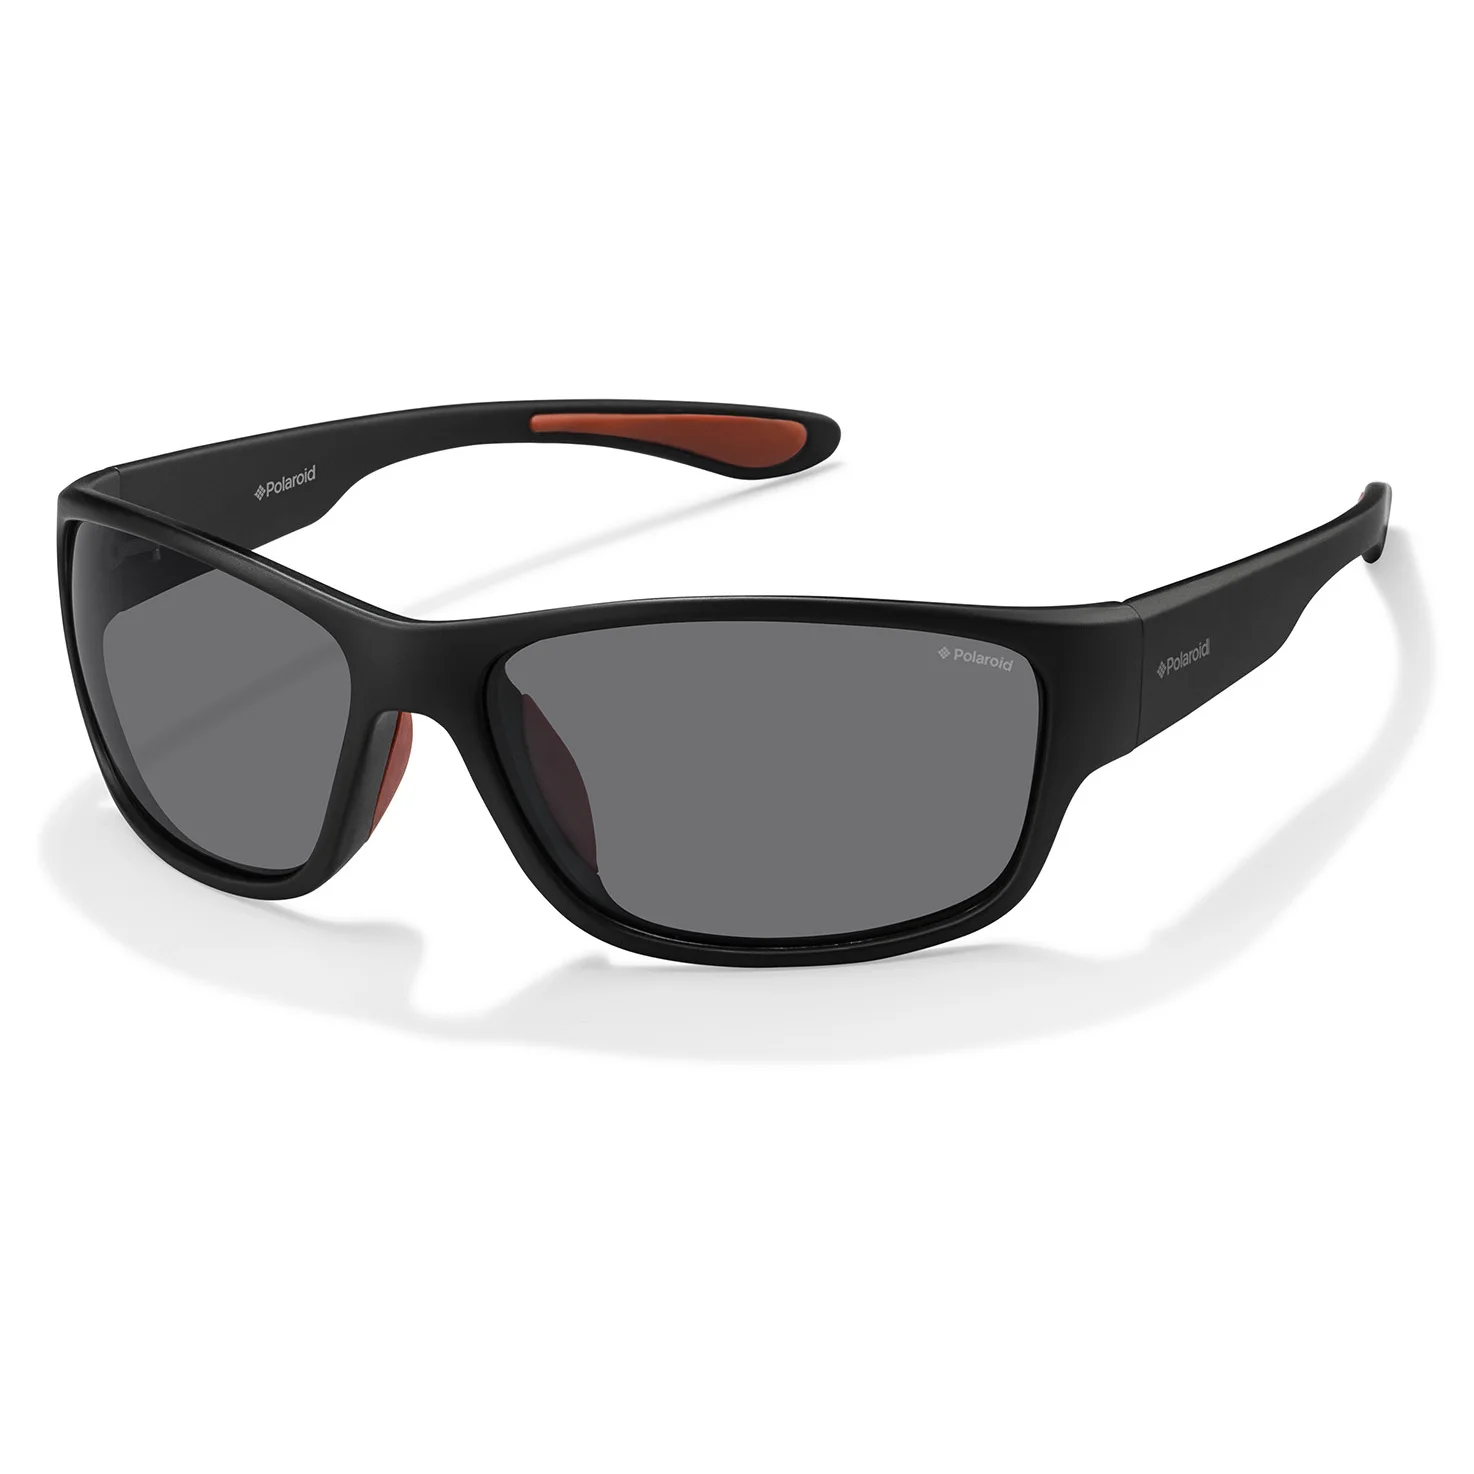 Sunglasses Polaroid sunglasses PLD 3015.S. dl5.y2 | Аксессуары для одежды